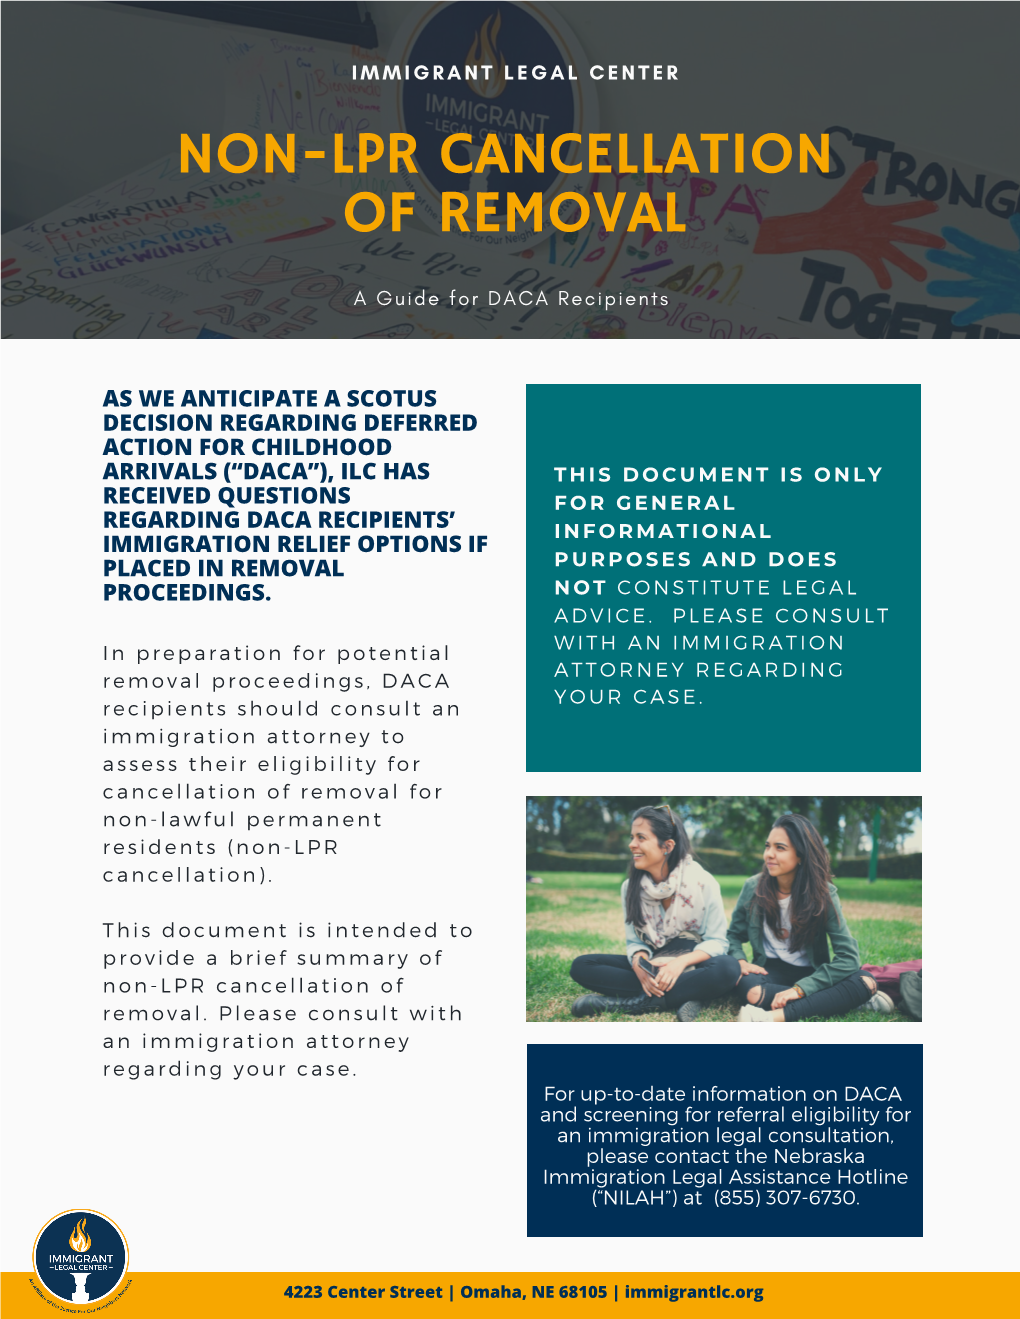 Non-Lpr Cancellation of Removal